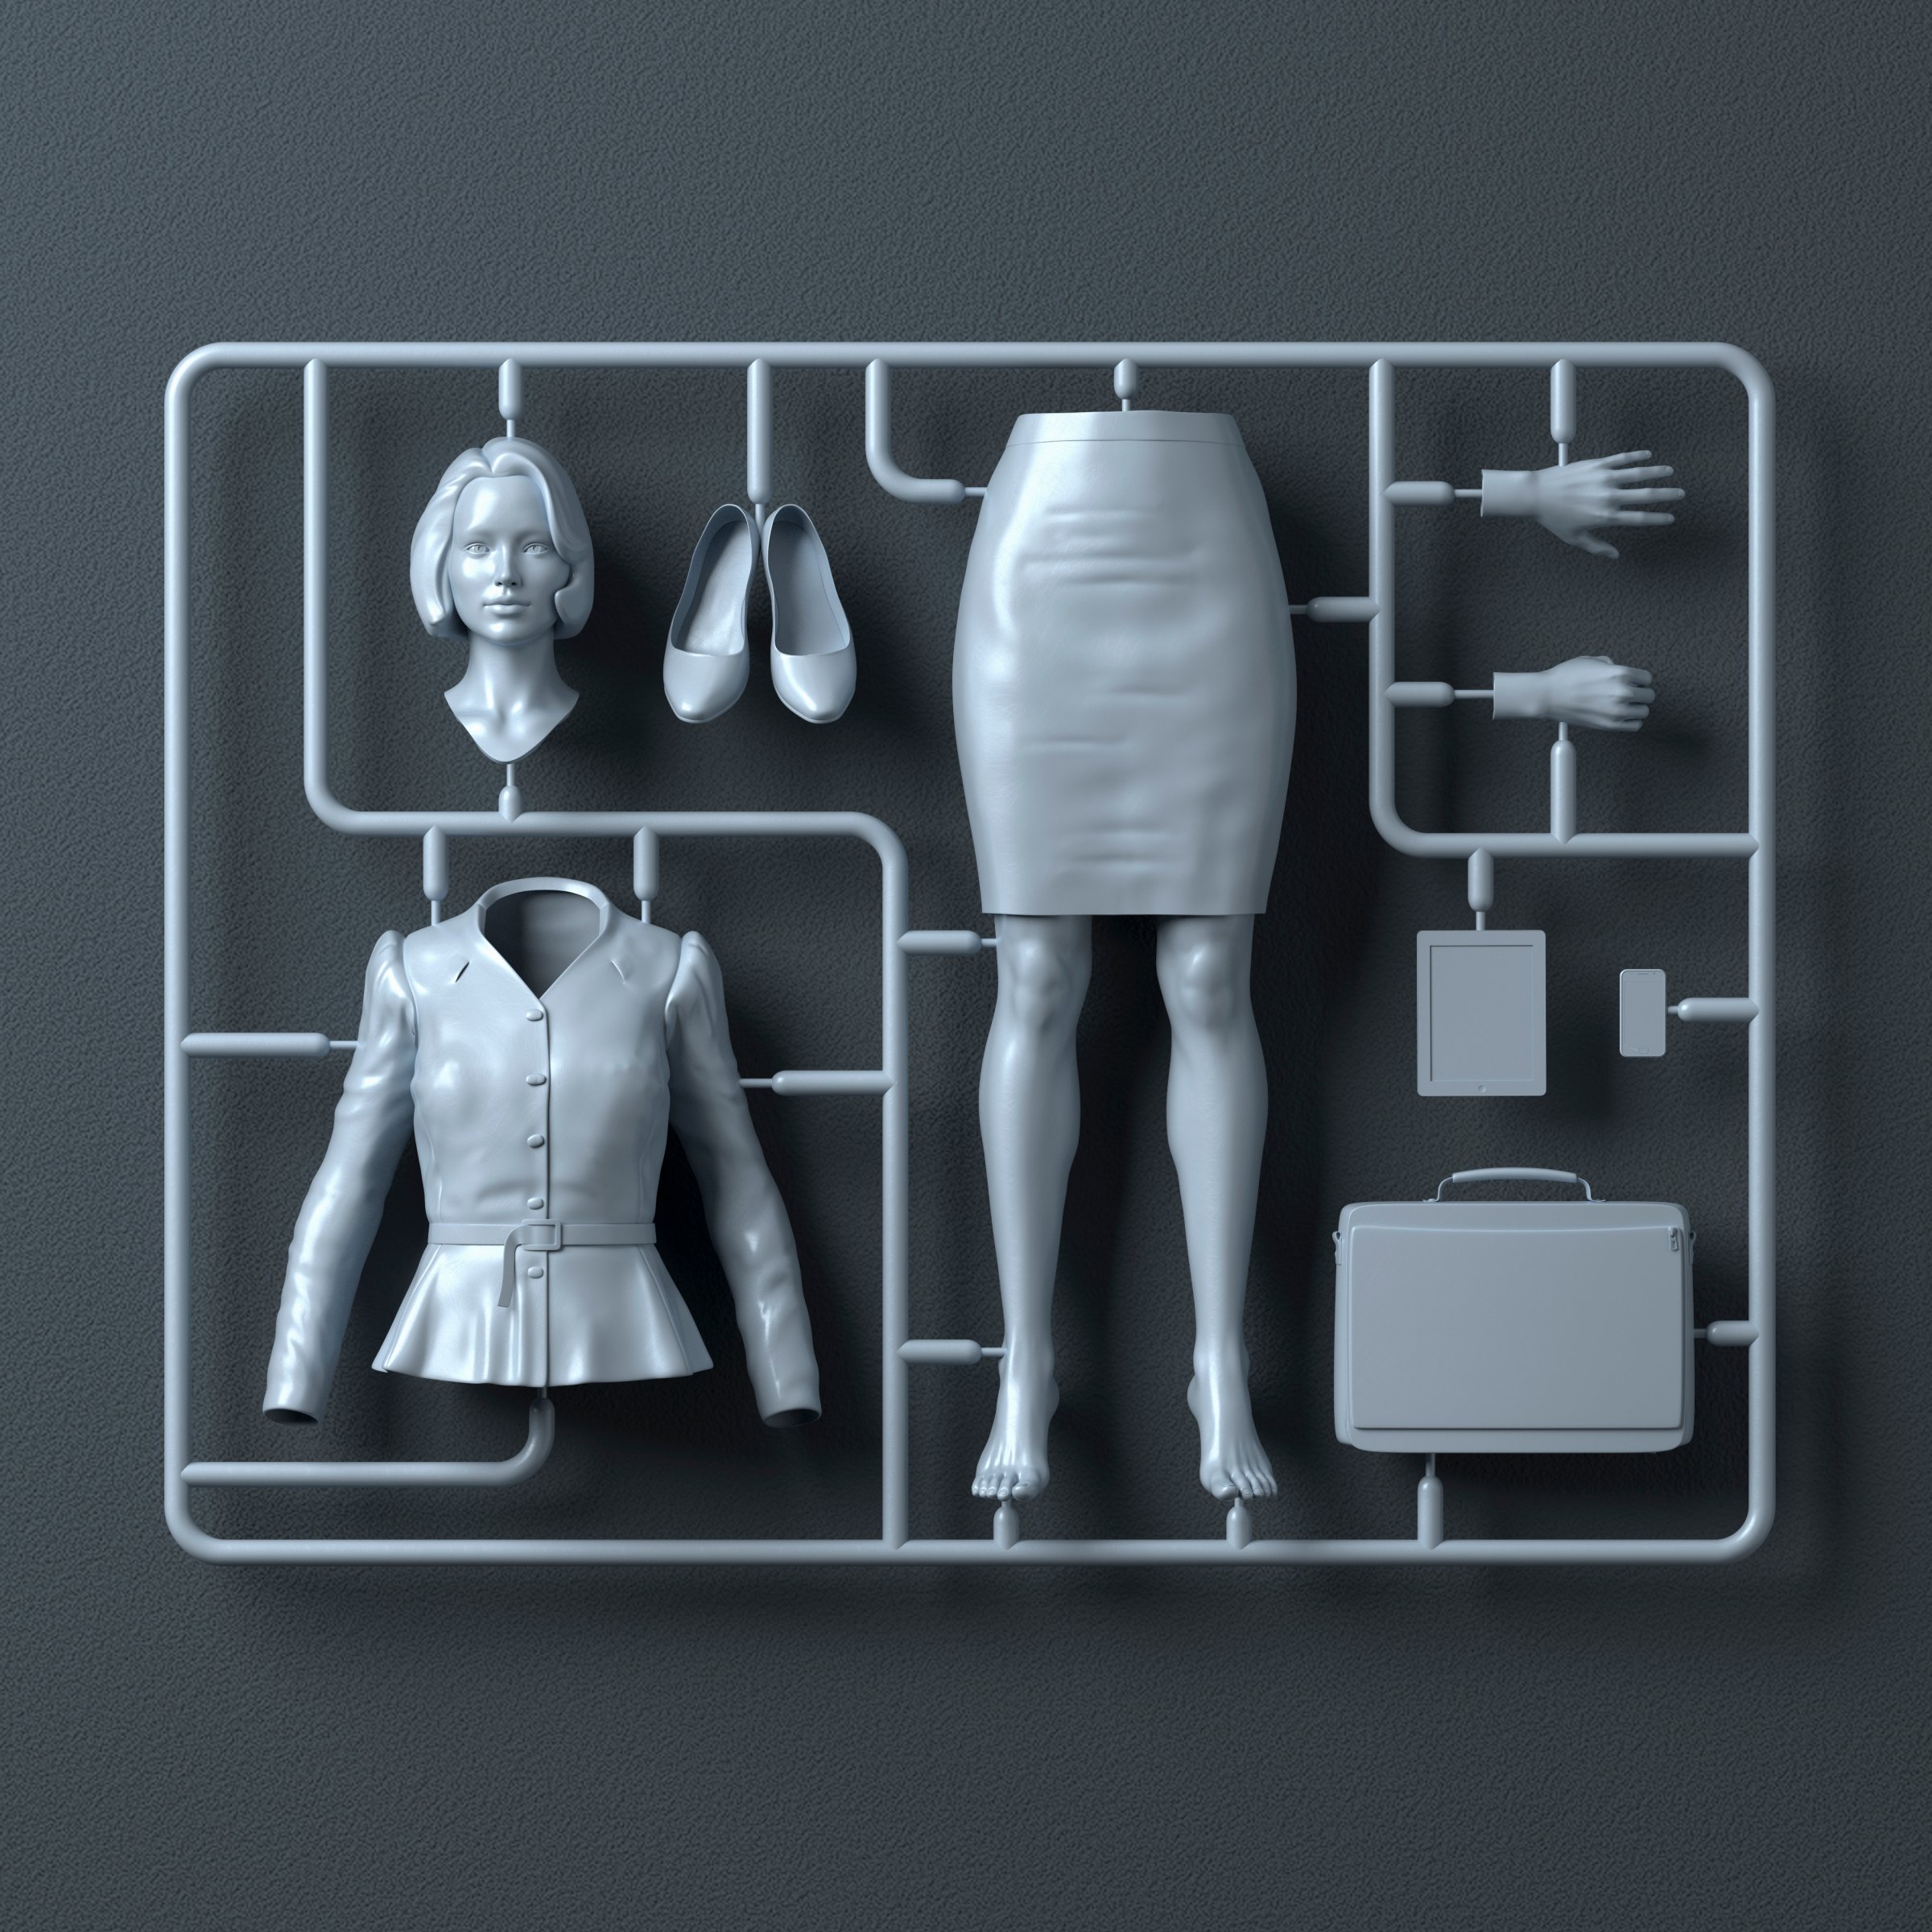 Plastic assembly kit for businesswoman